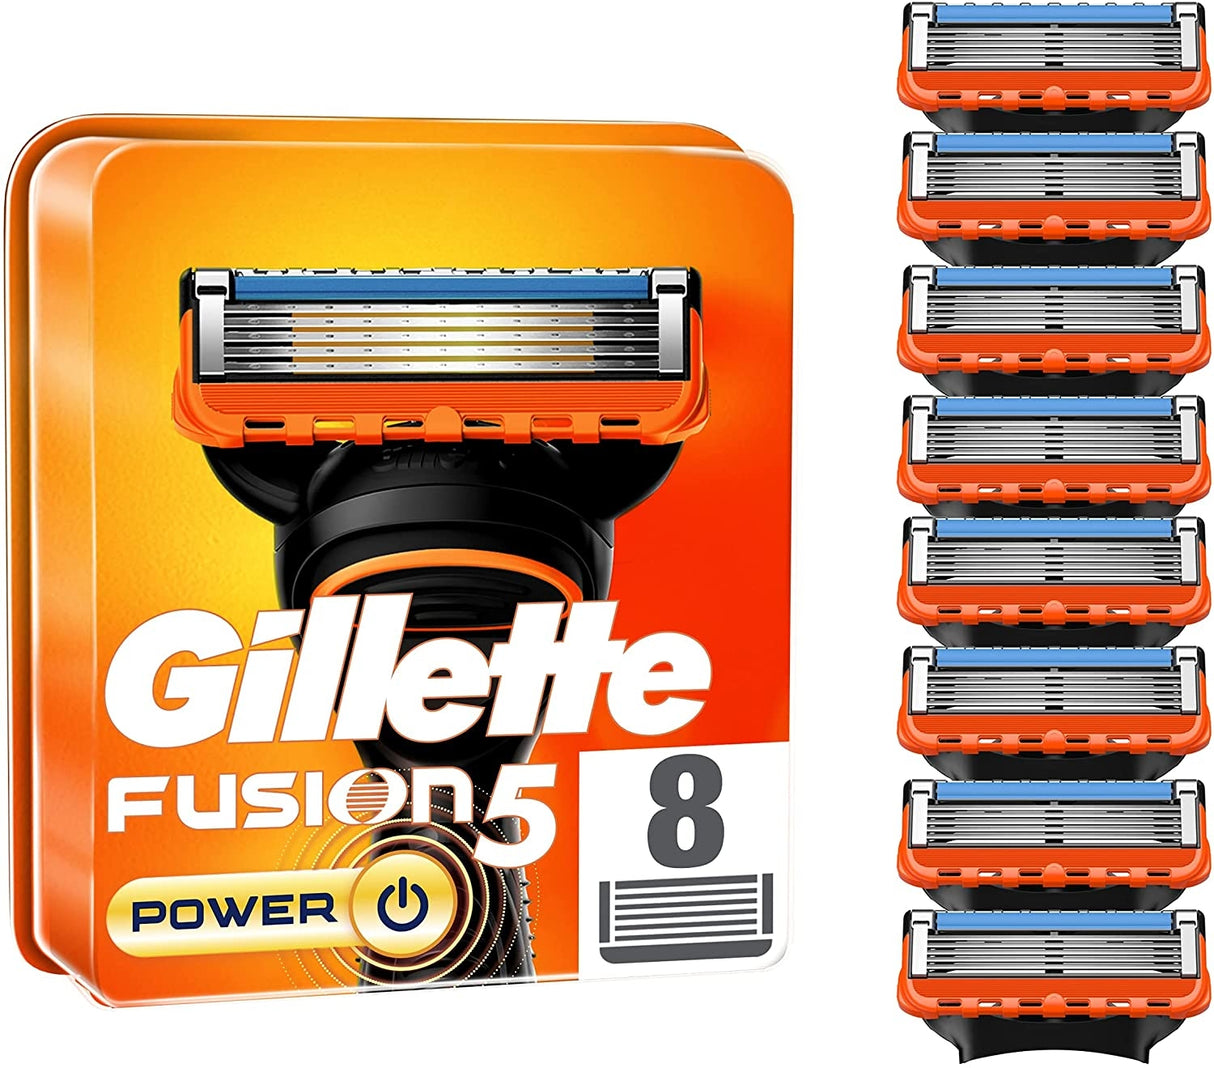 Gillette Fusion5 Power Razor Blades - 8 Pack